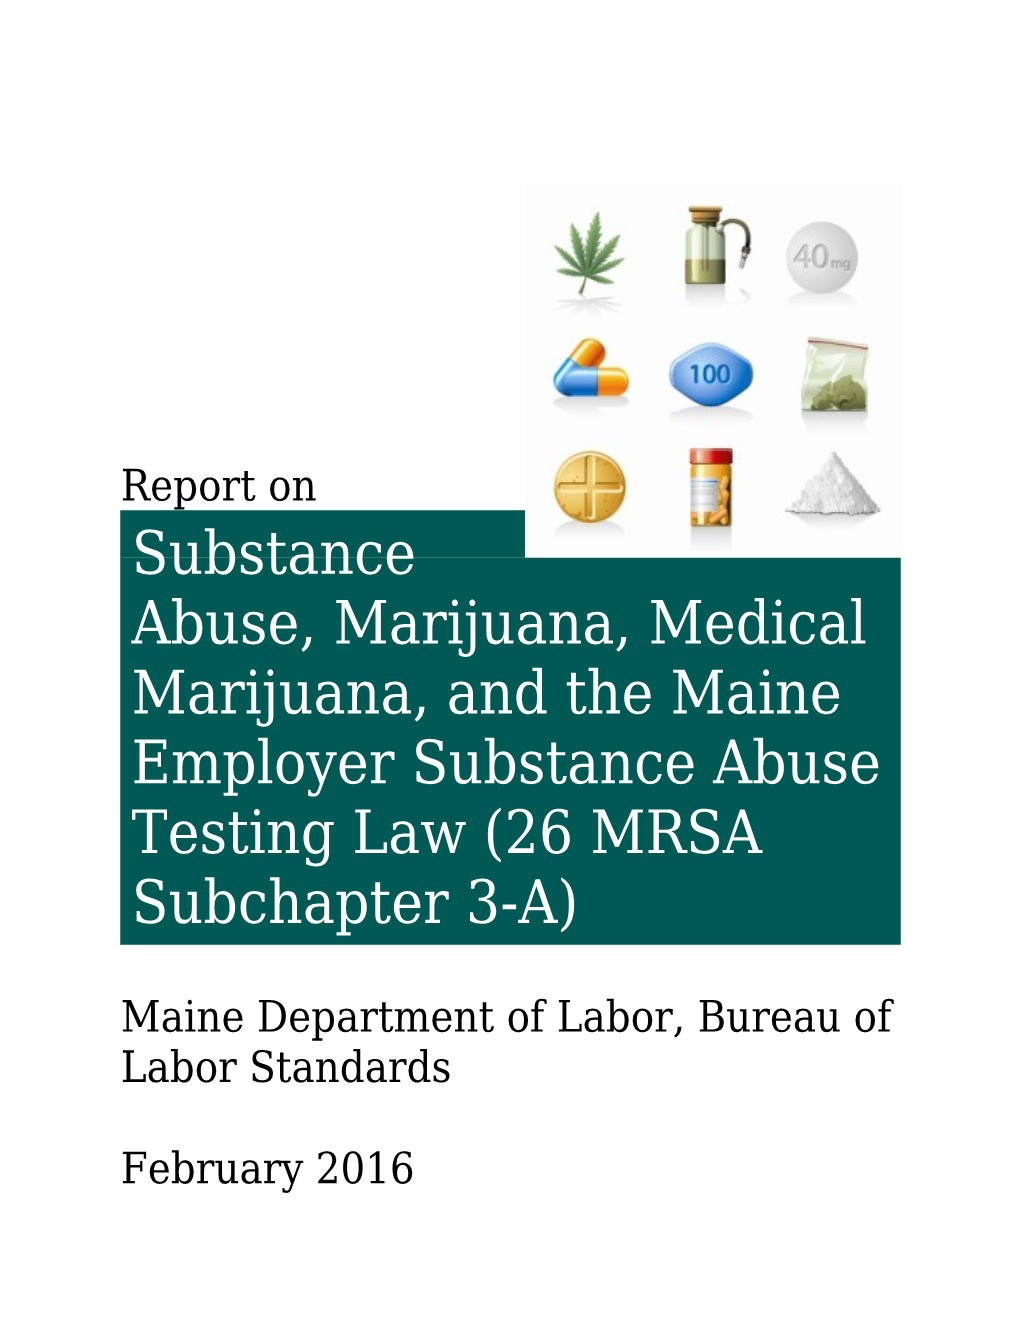 Maine Department of Labor, Bureau of Labor Standards